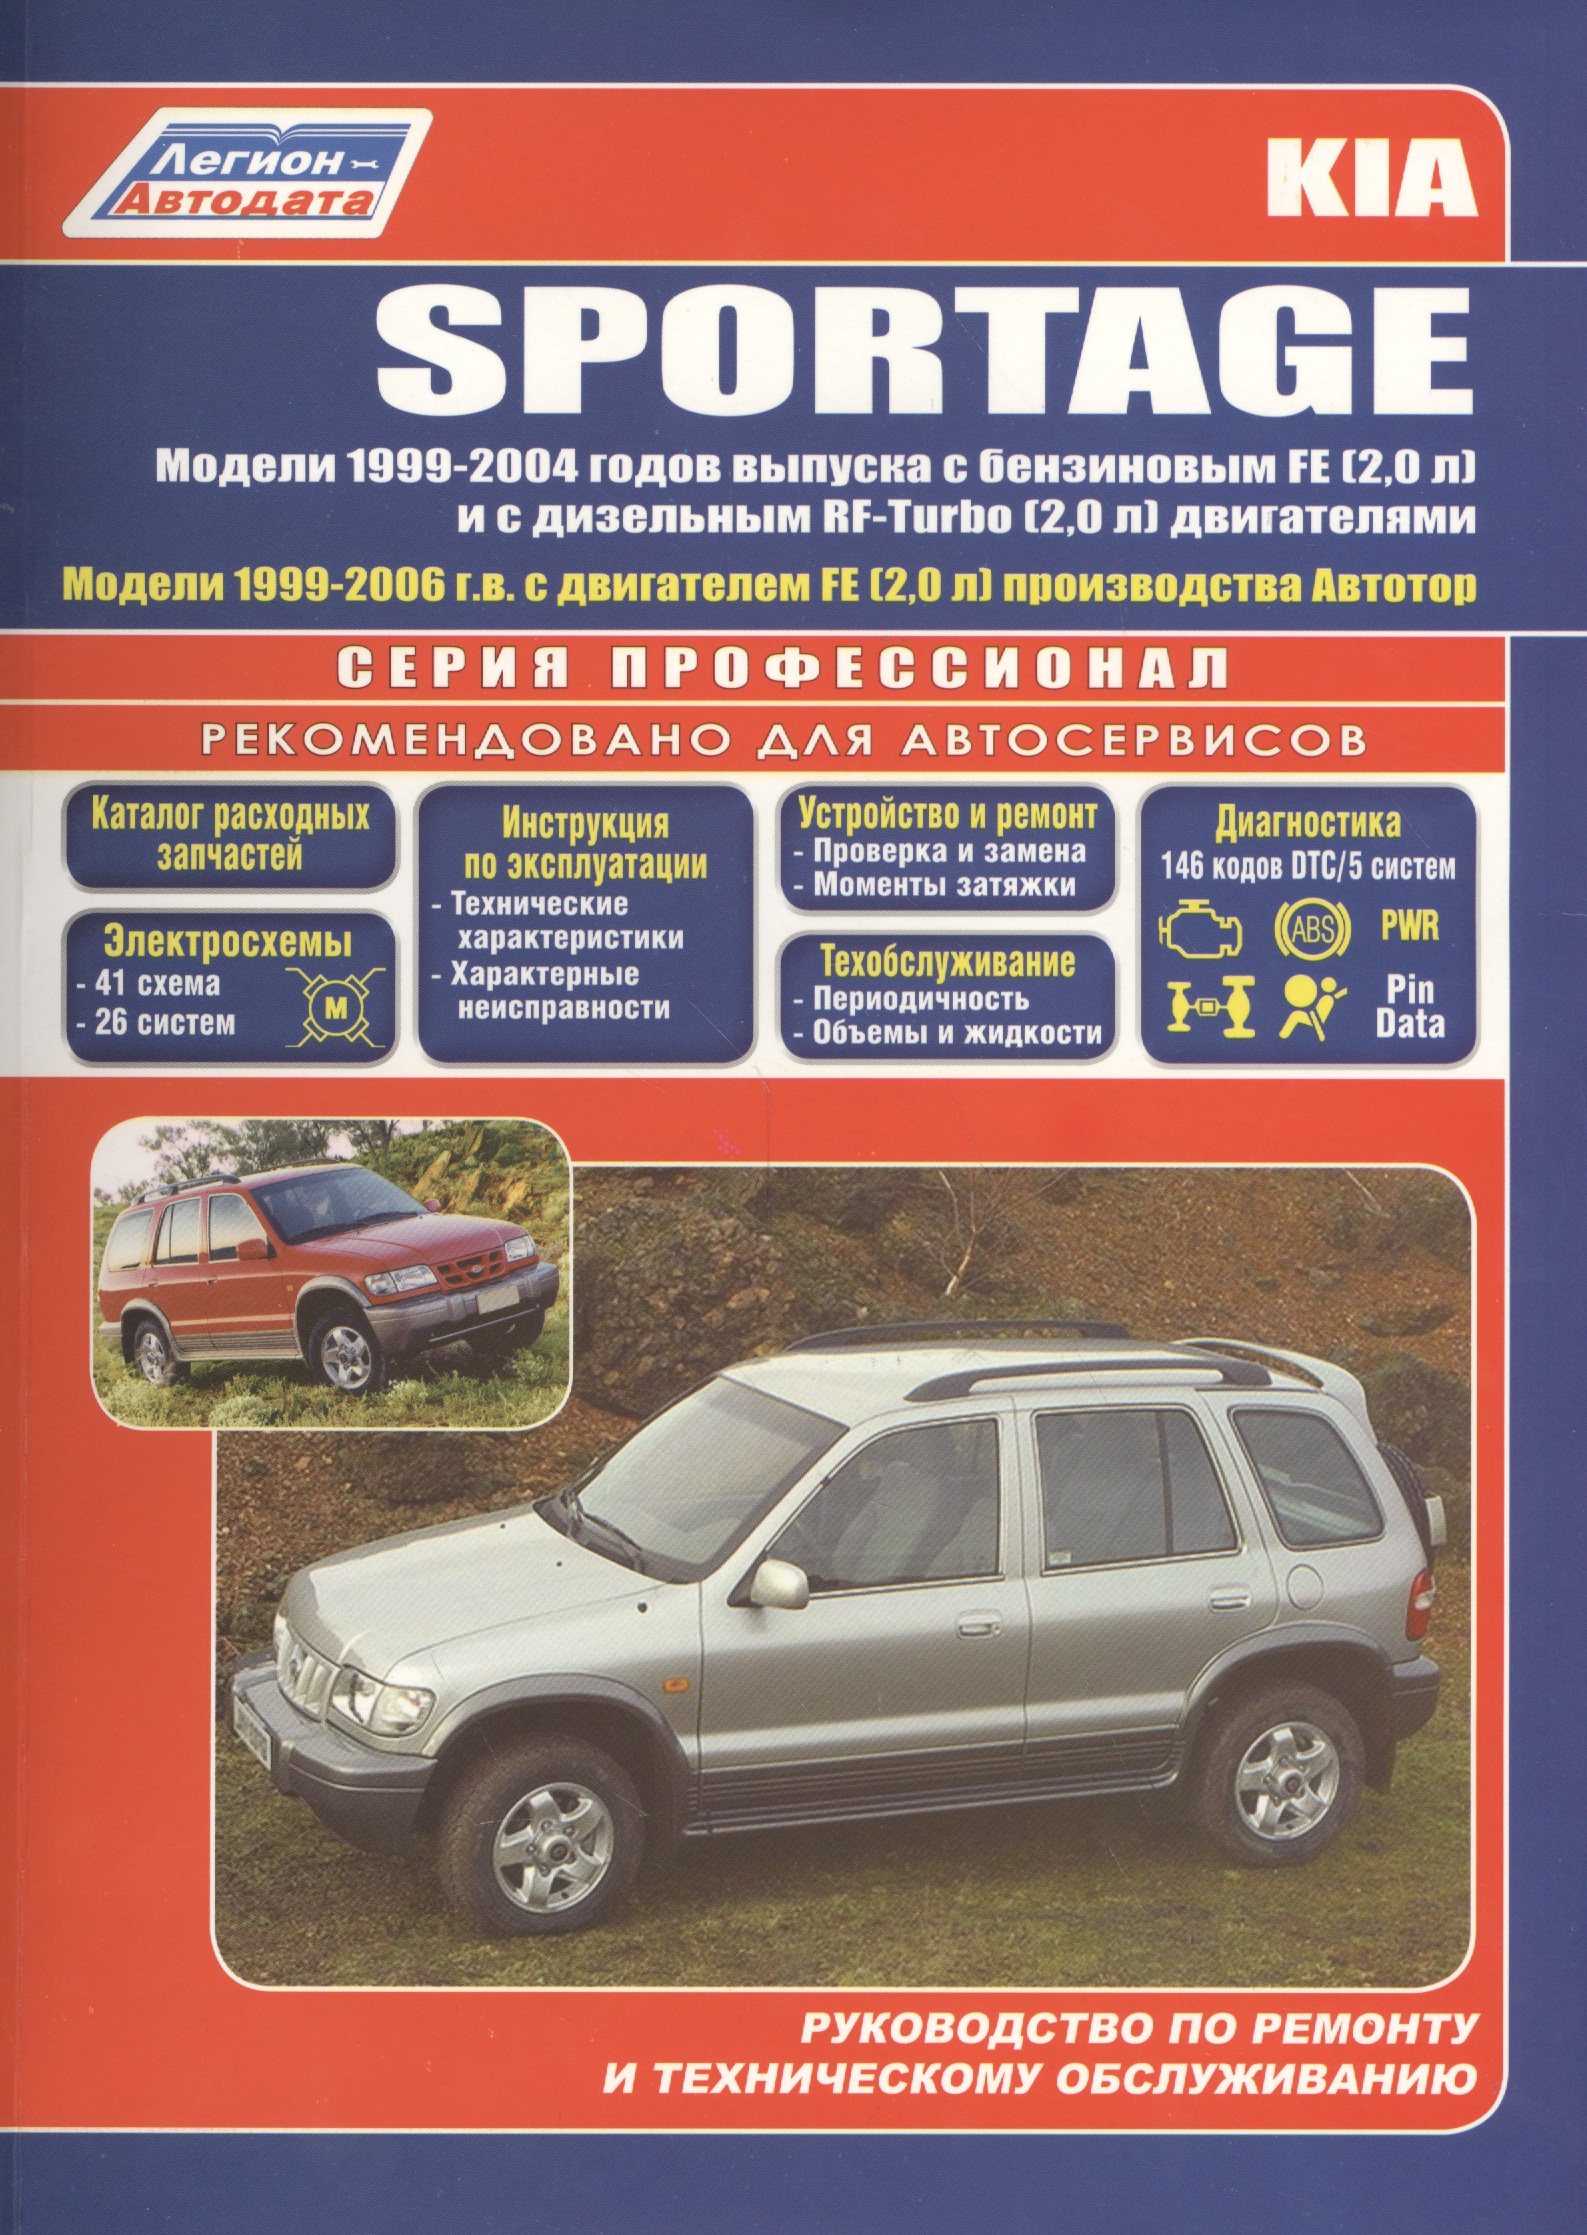 Kia Sportage Модели 2WD&4WD 1999-2004 г вып. с бенз. FE (2,0)…(мПрофессионал) ignition coil for hyundai santa fe 2 7l kia optima 2 7l 2006 2008 no 27301 3e100 273013e100